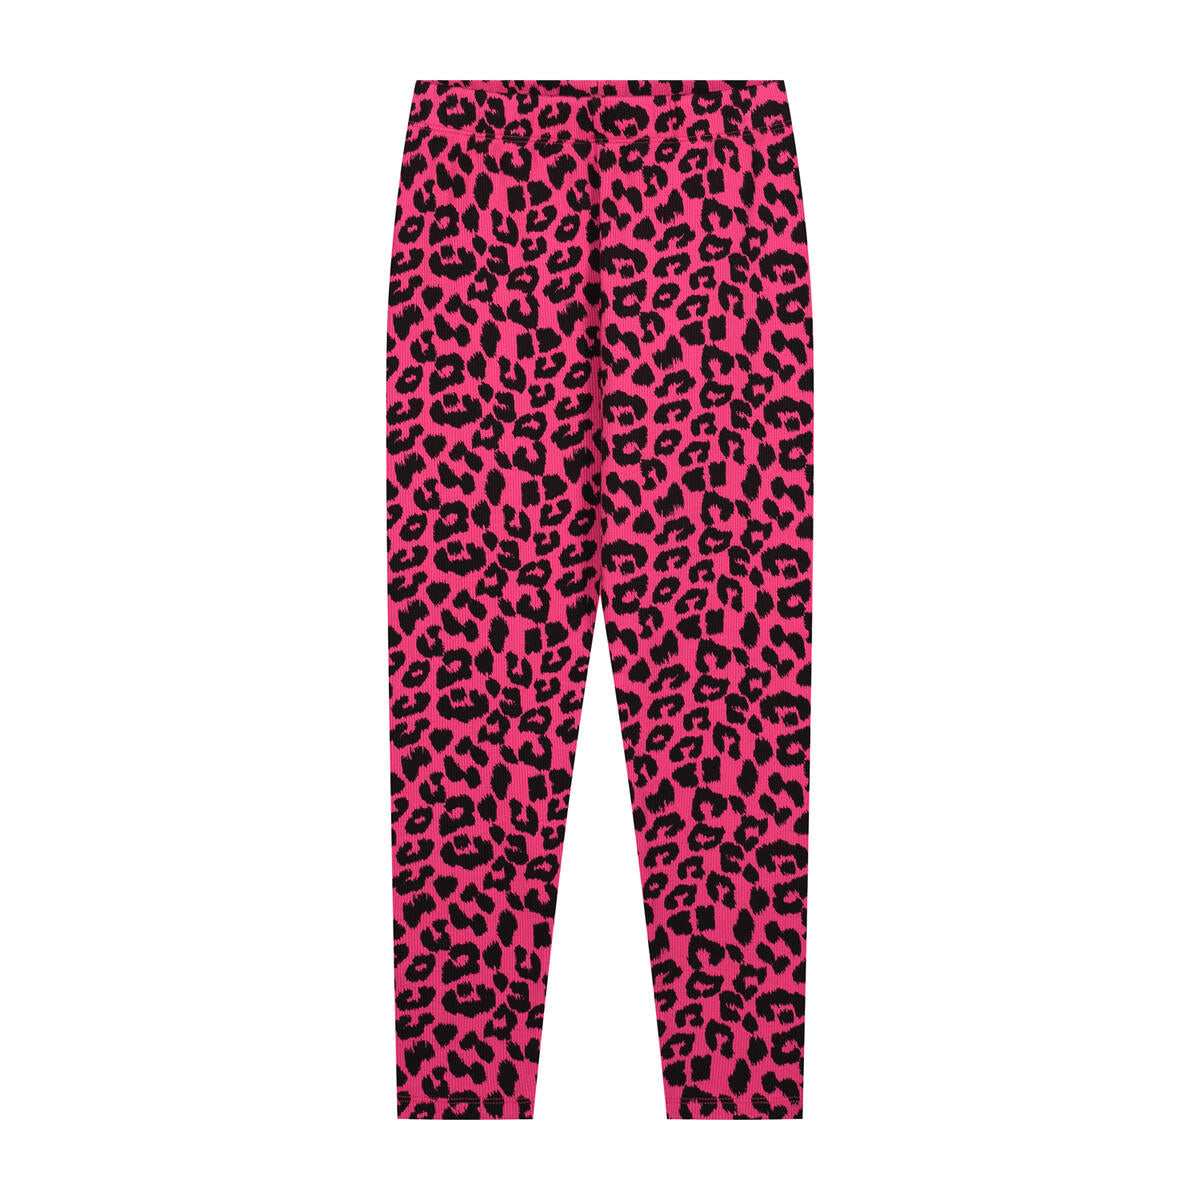 Leopard pants pink yarrow, Daily Brat